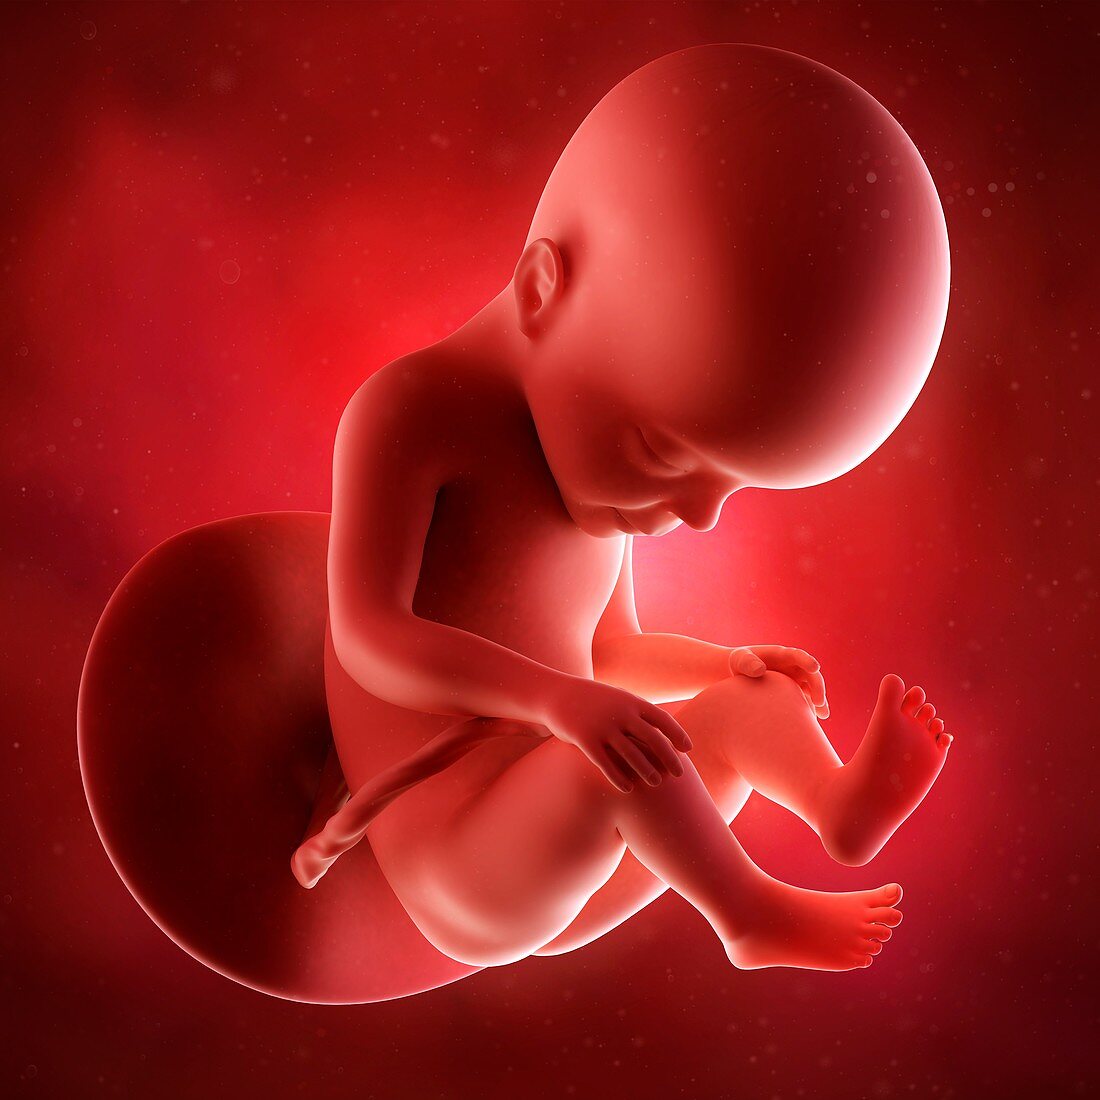 Human fetus age 27 weeks